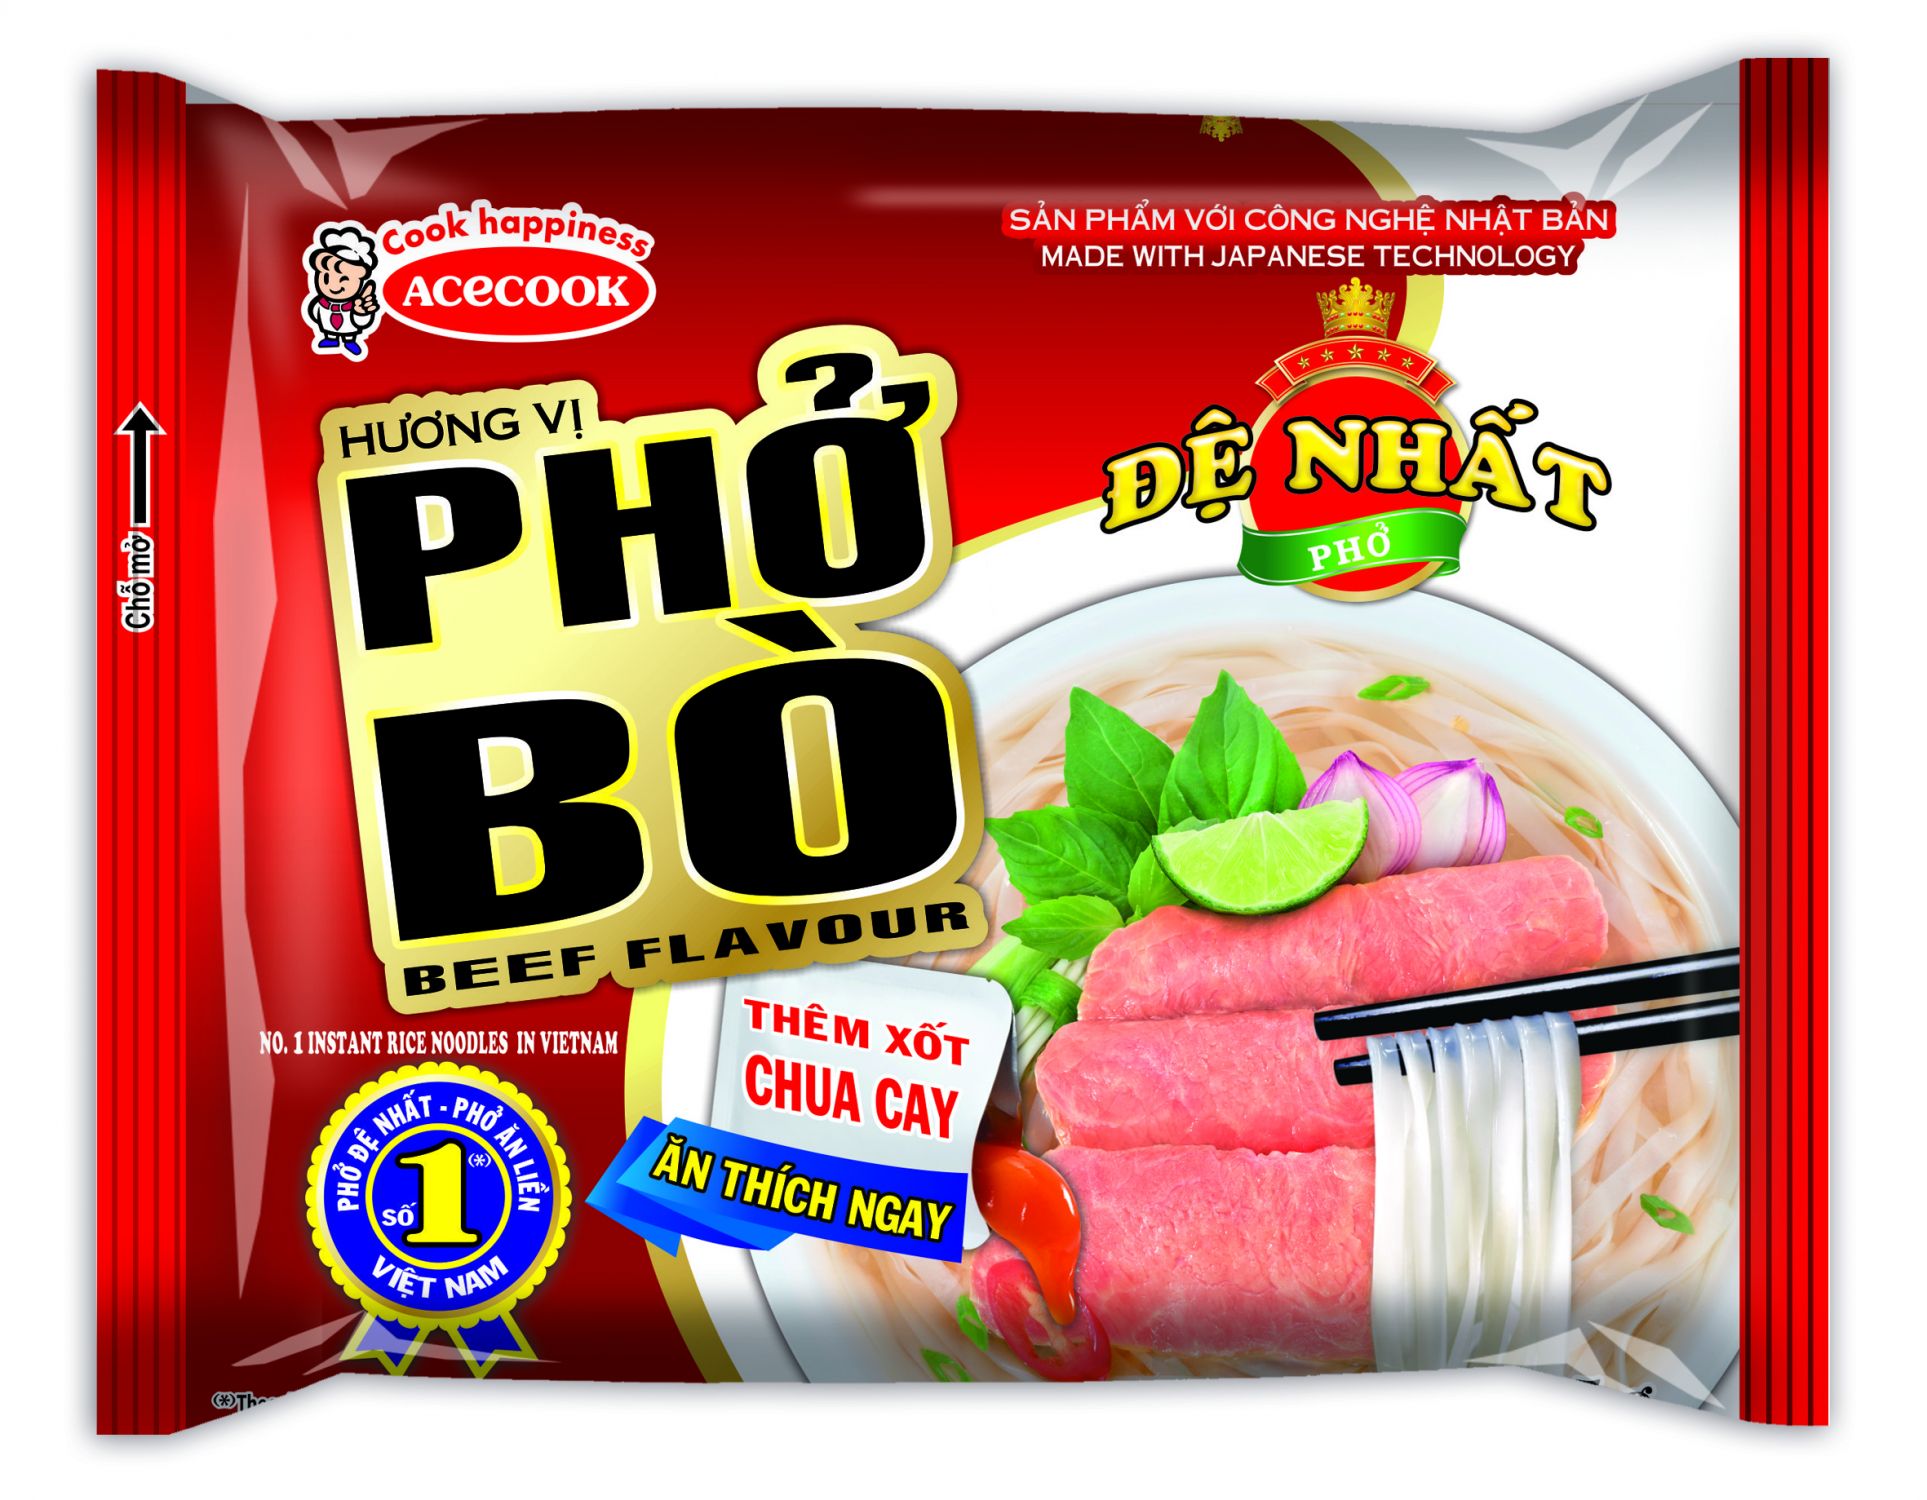 anh 1 ACV - Pho De Nhat - Huong vi Bo